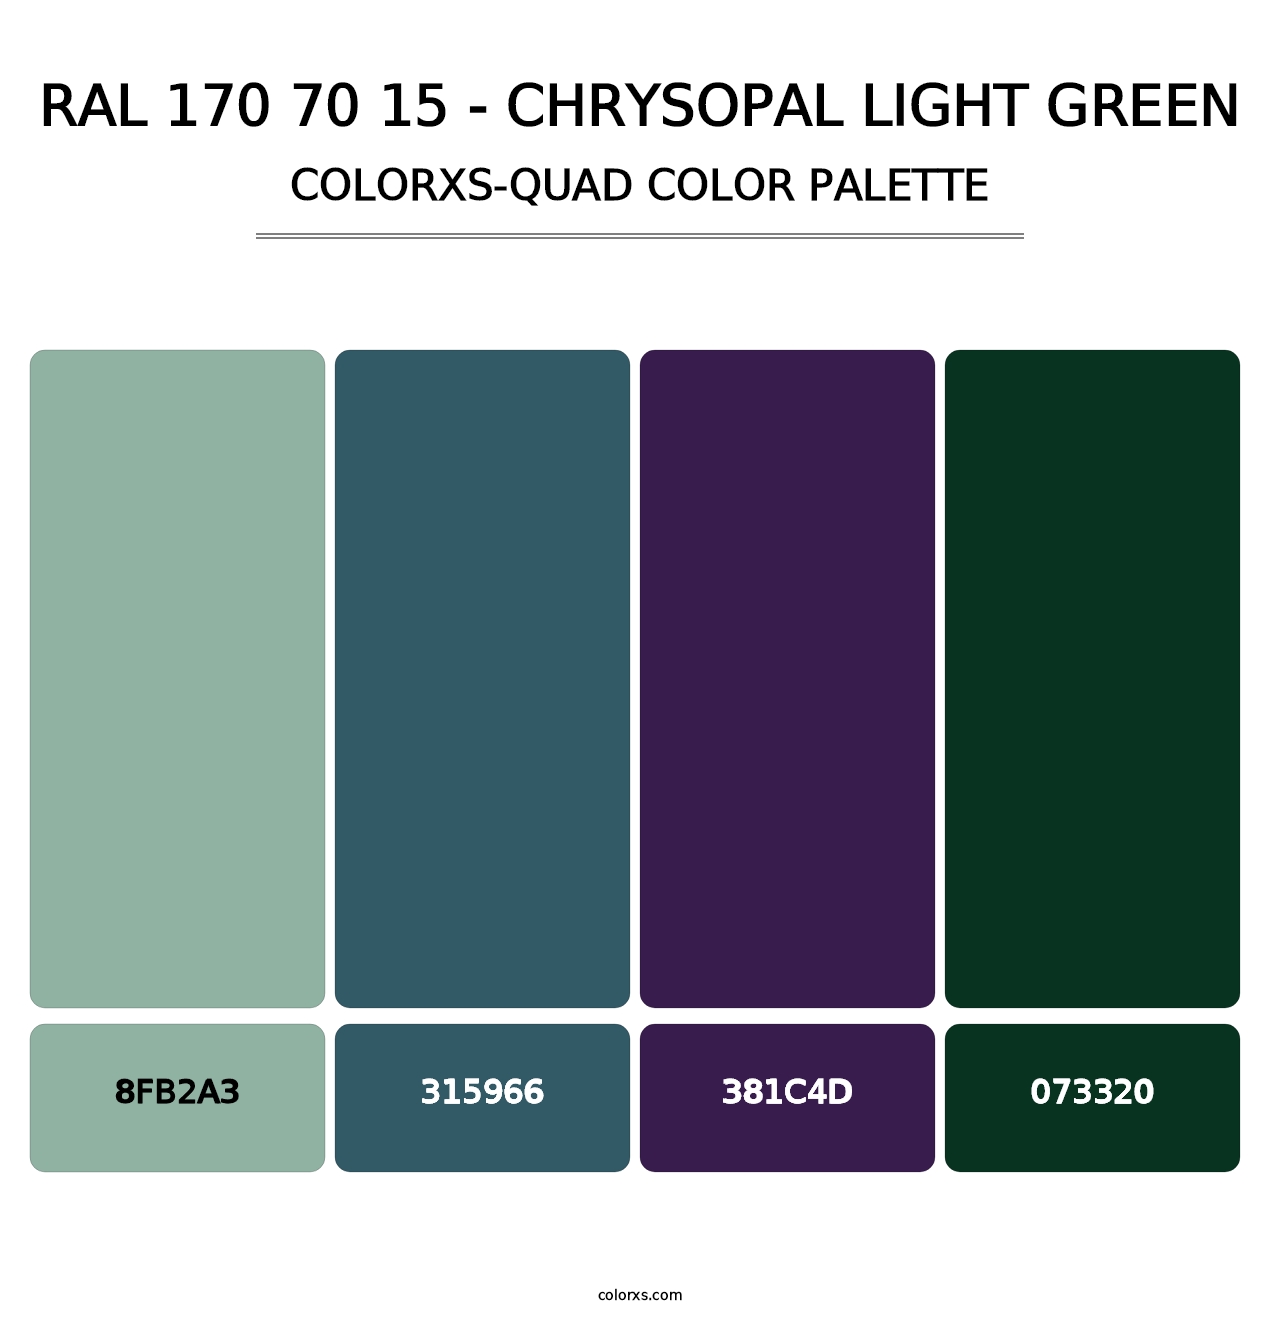 RAL 170 70 15 - Chrysopal Light Green - Colorxs Quad Palette